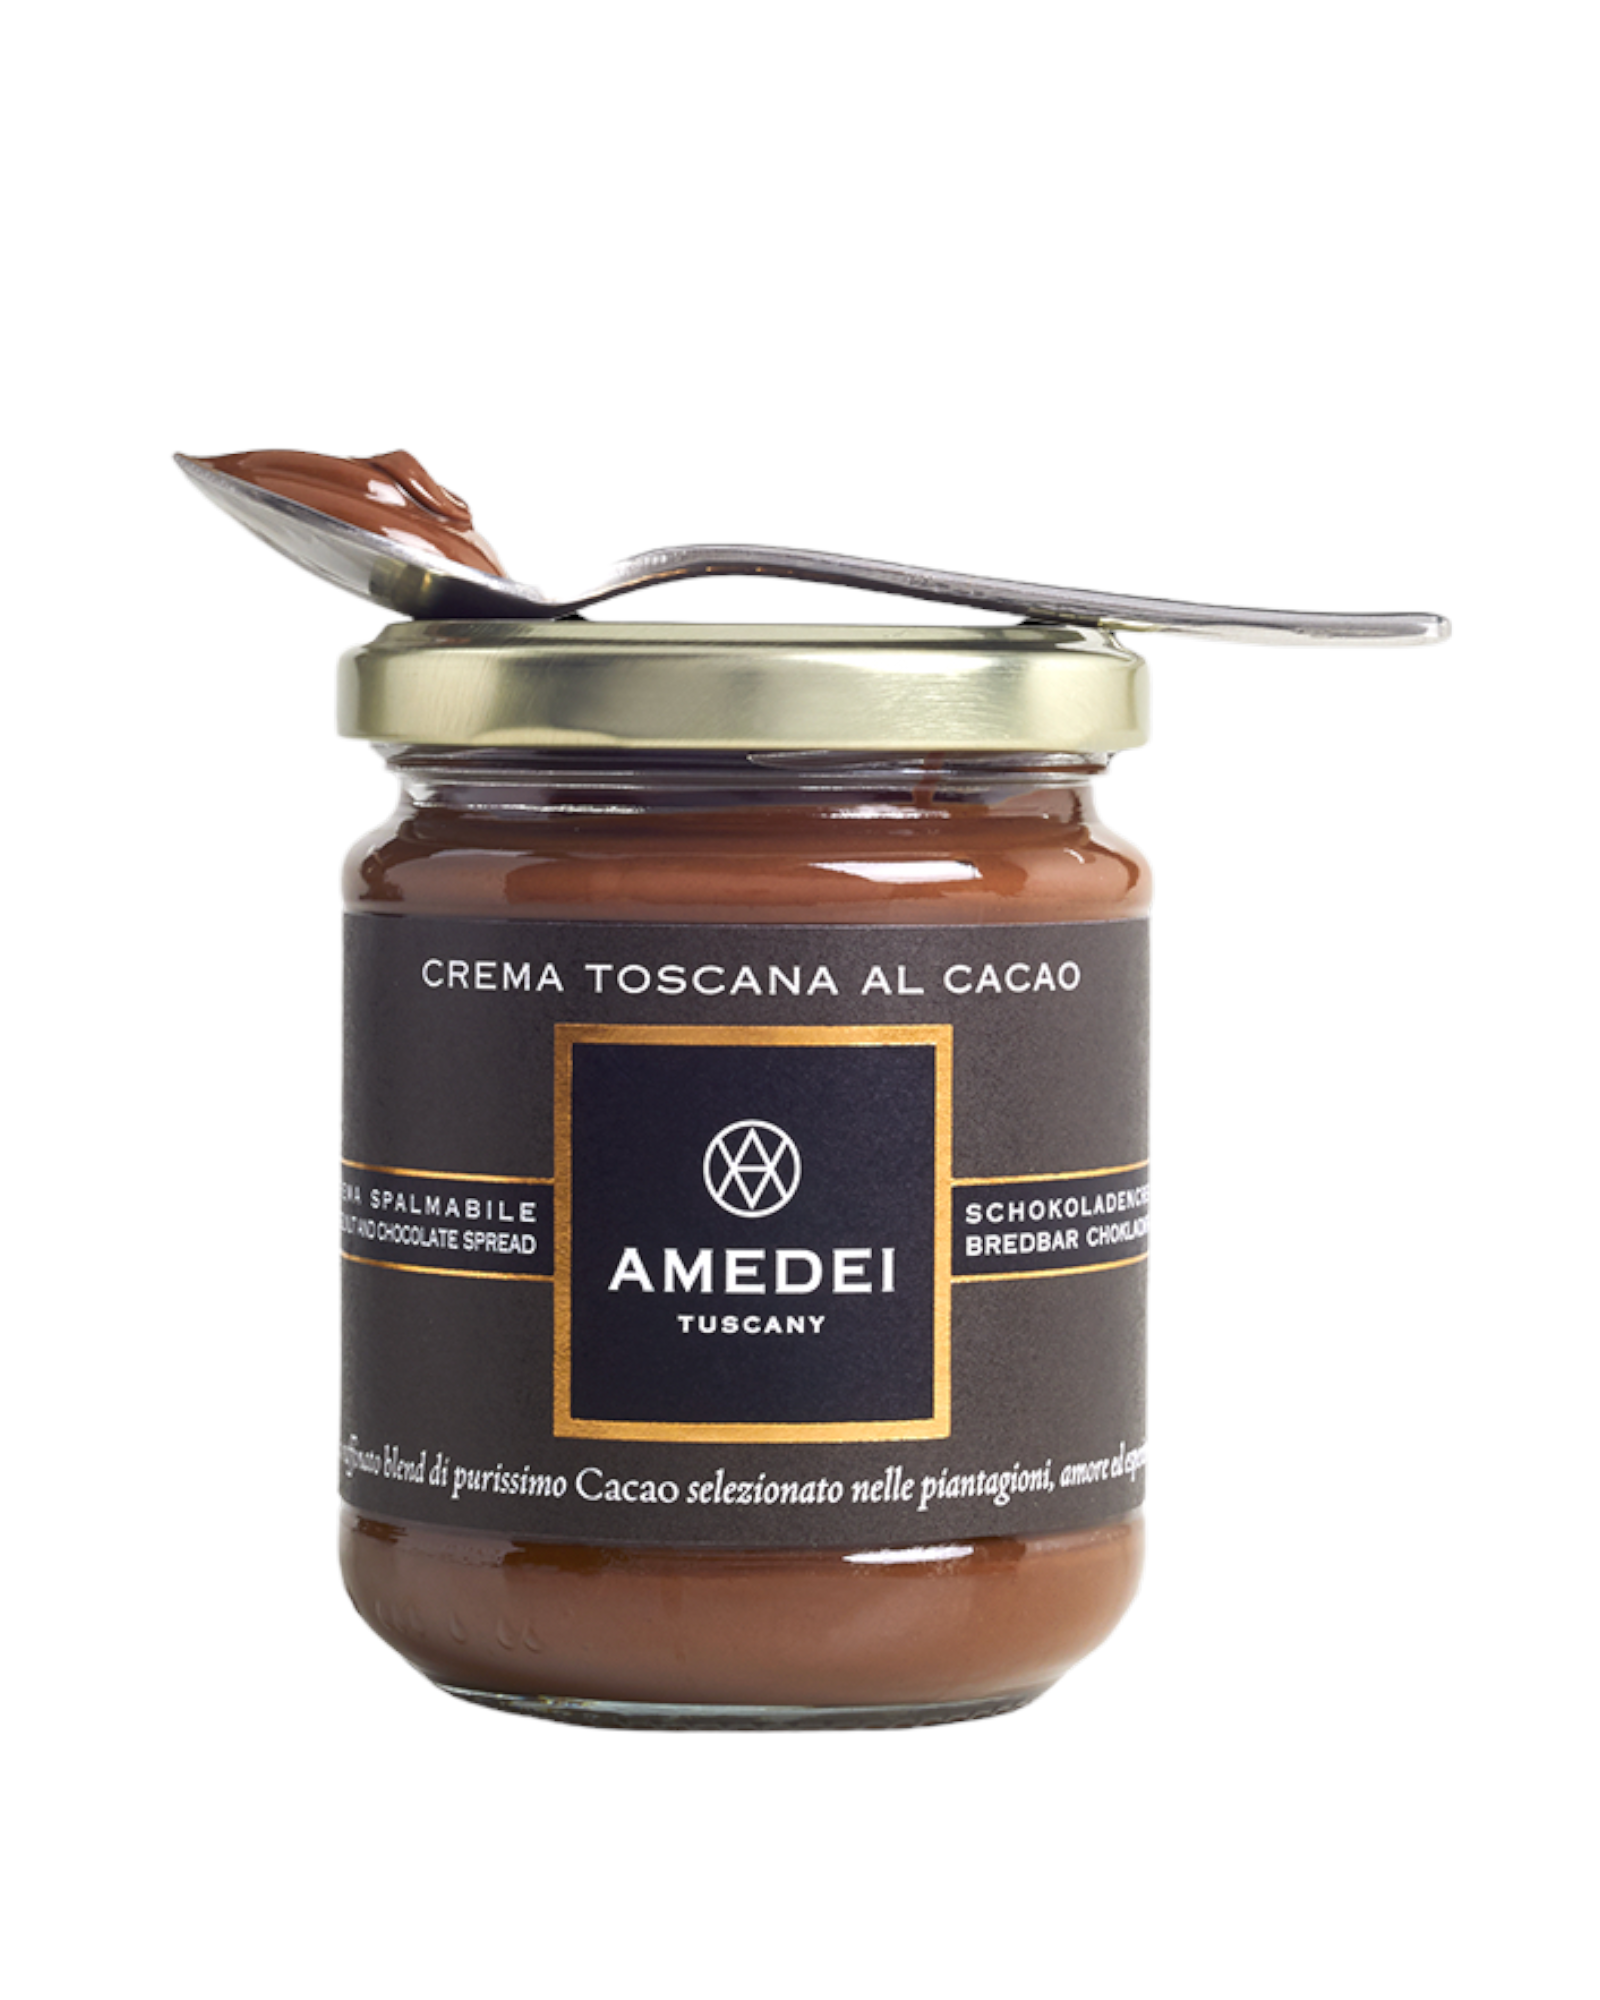 Amedei Crema Toscana chocolate spread (200g)